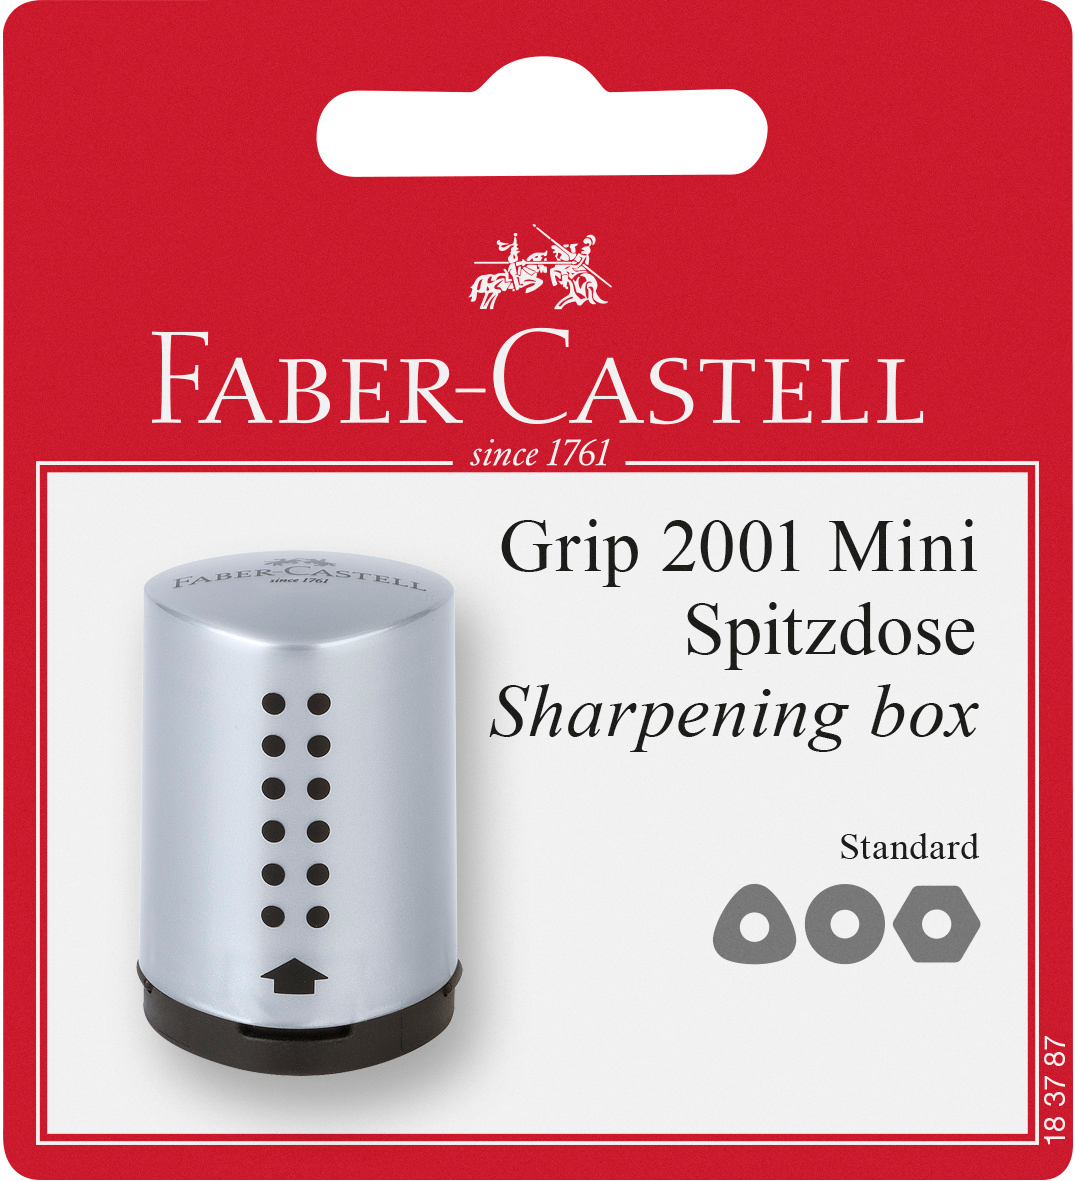 FABER-CASTELL Grip 2001 Mini Taille-crayon 183787 argent argent